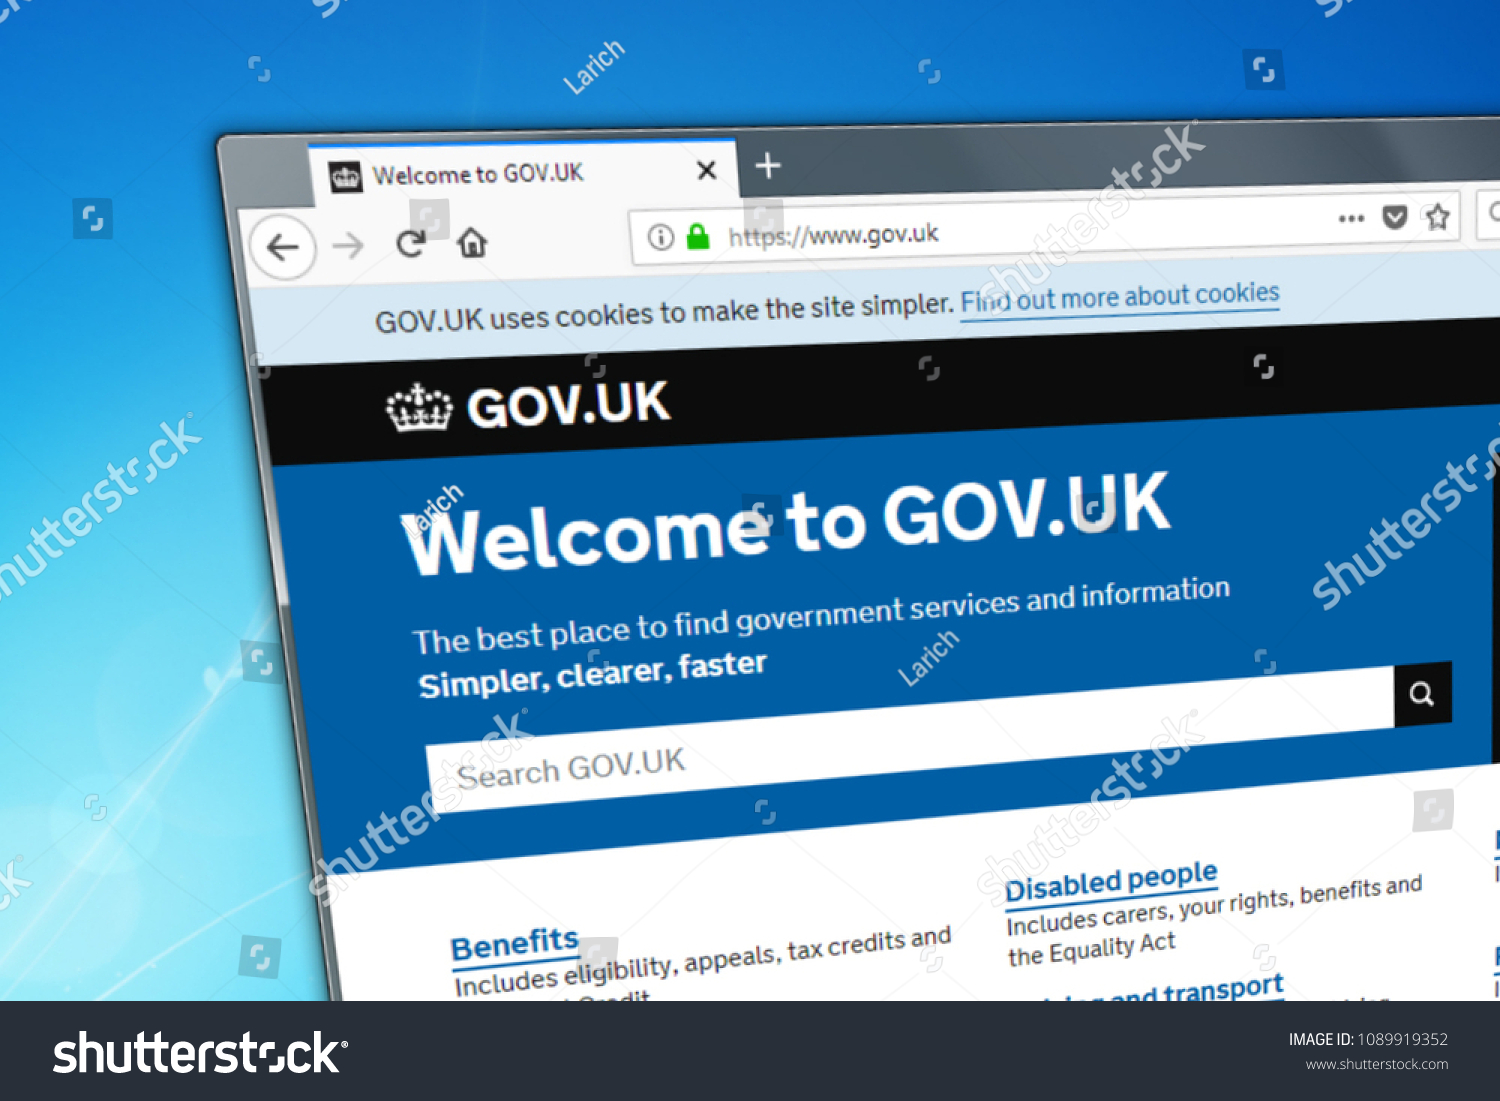 gov.uk covid update schools